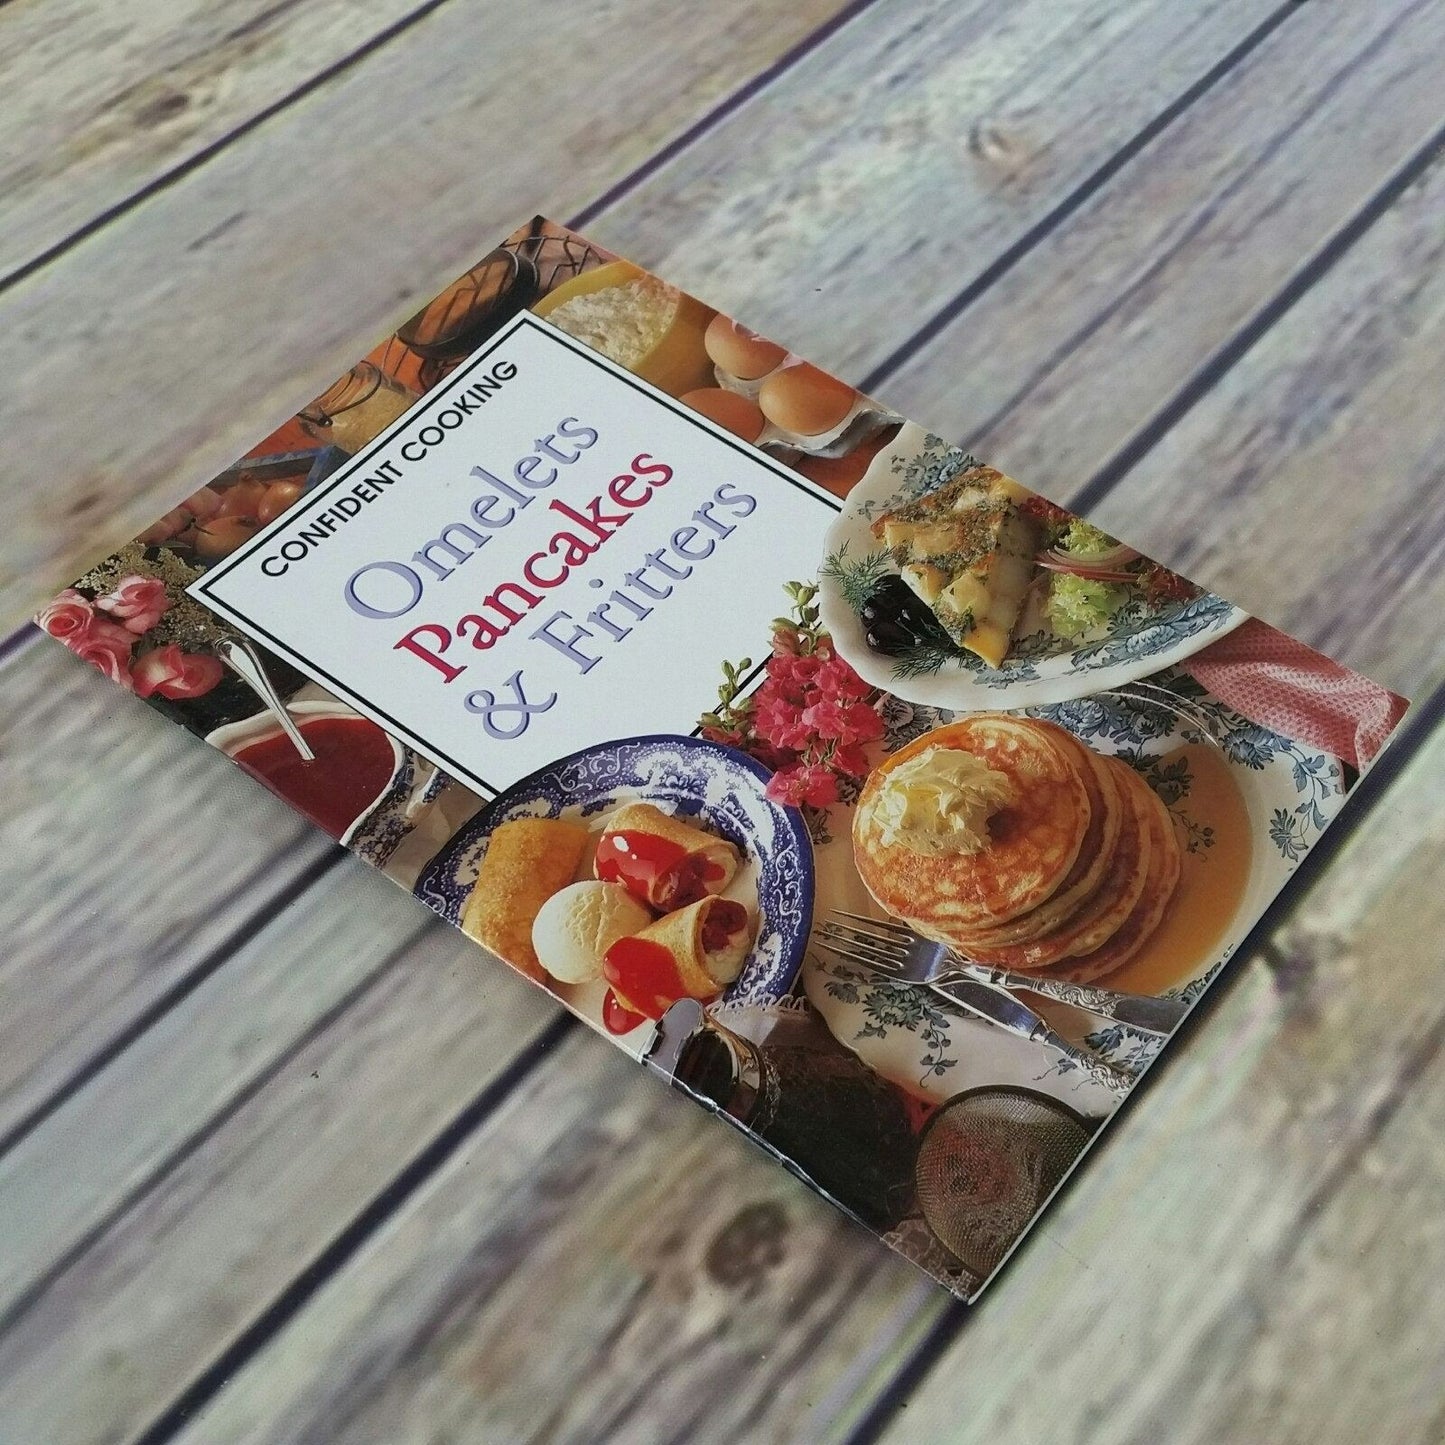 Vintage Cookbook Omelets Pancakes and Fritters 1995 Konemann Paperback Booklet